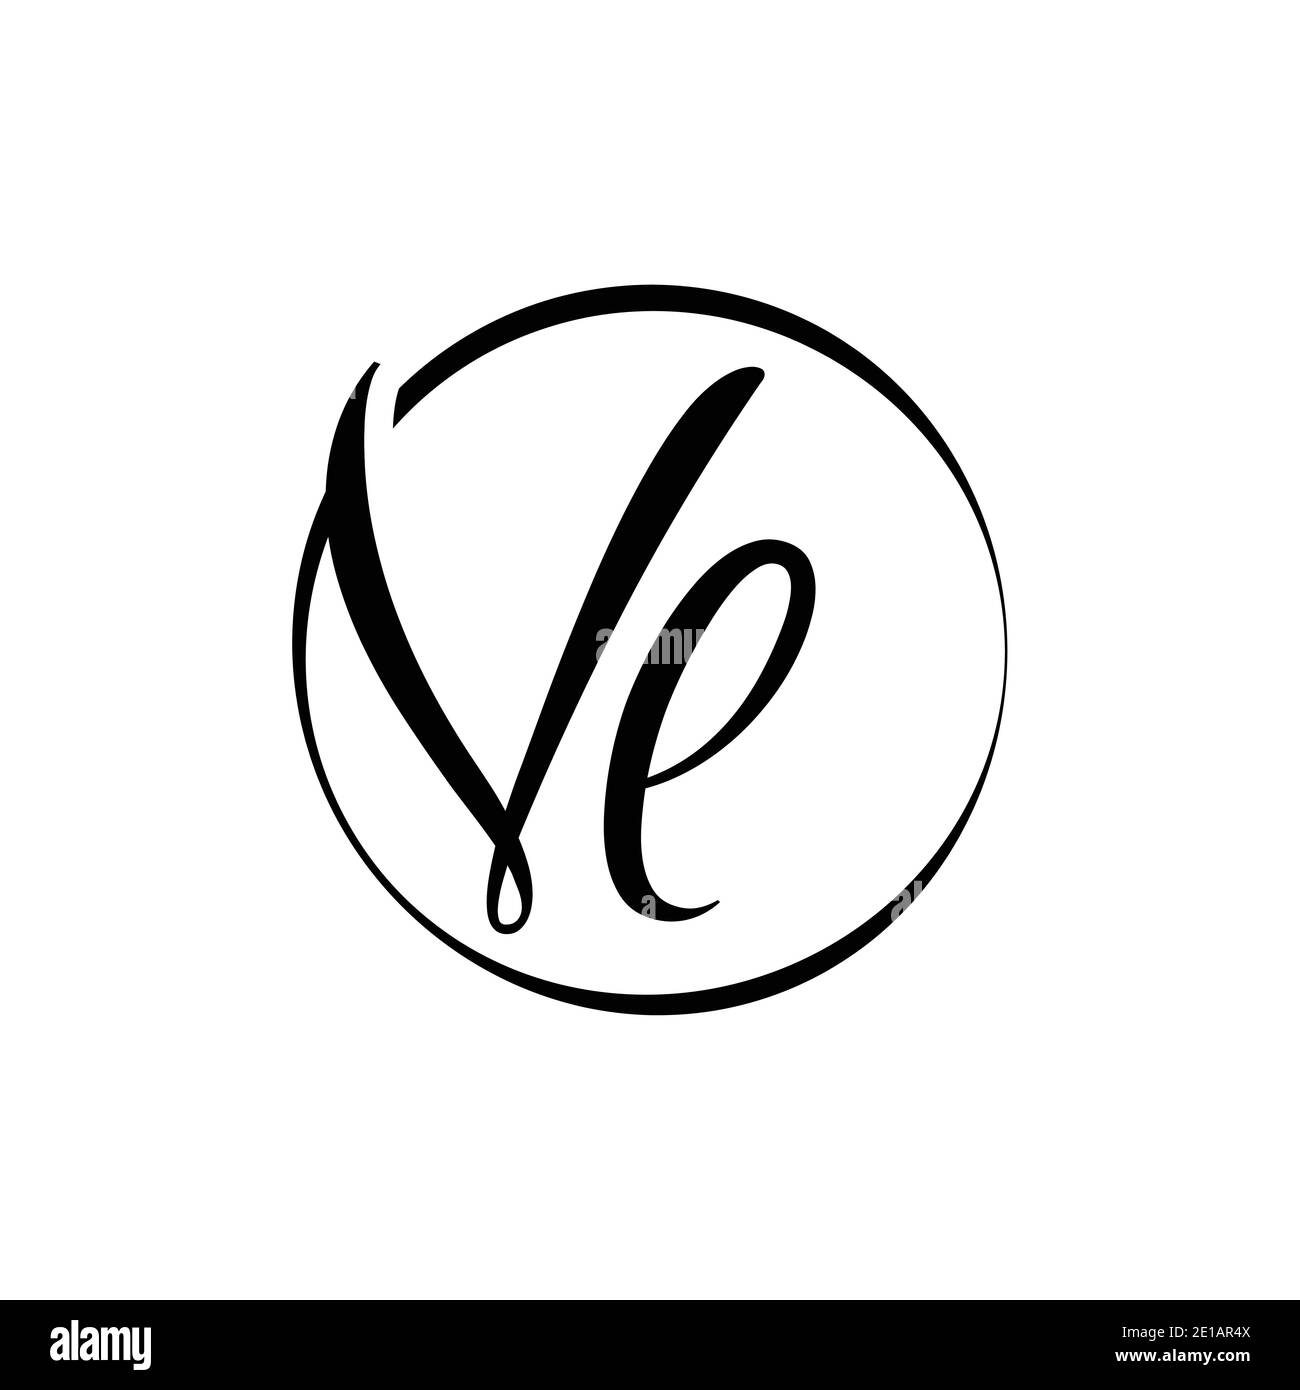 Example vector logo VL Stock Vector by ©Valentin1982 90875036